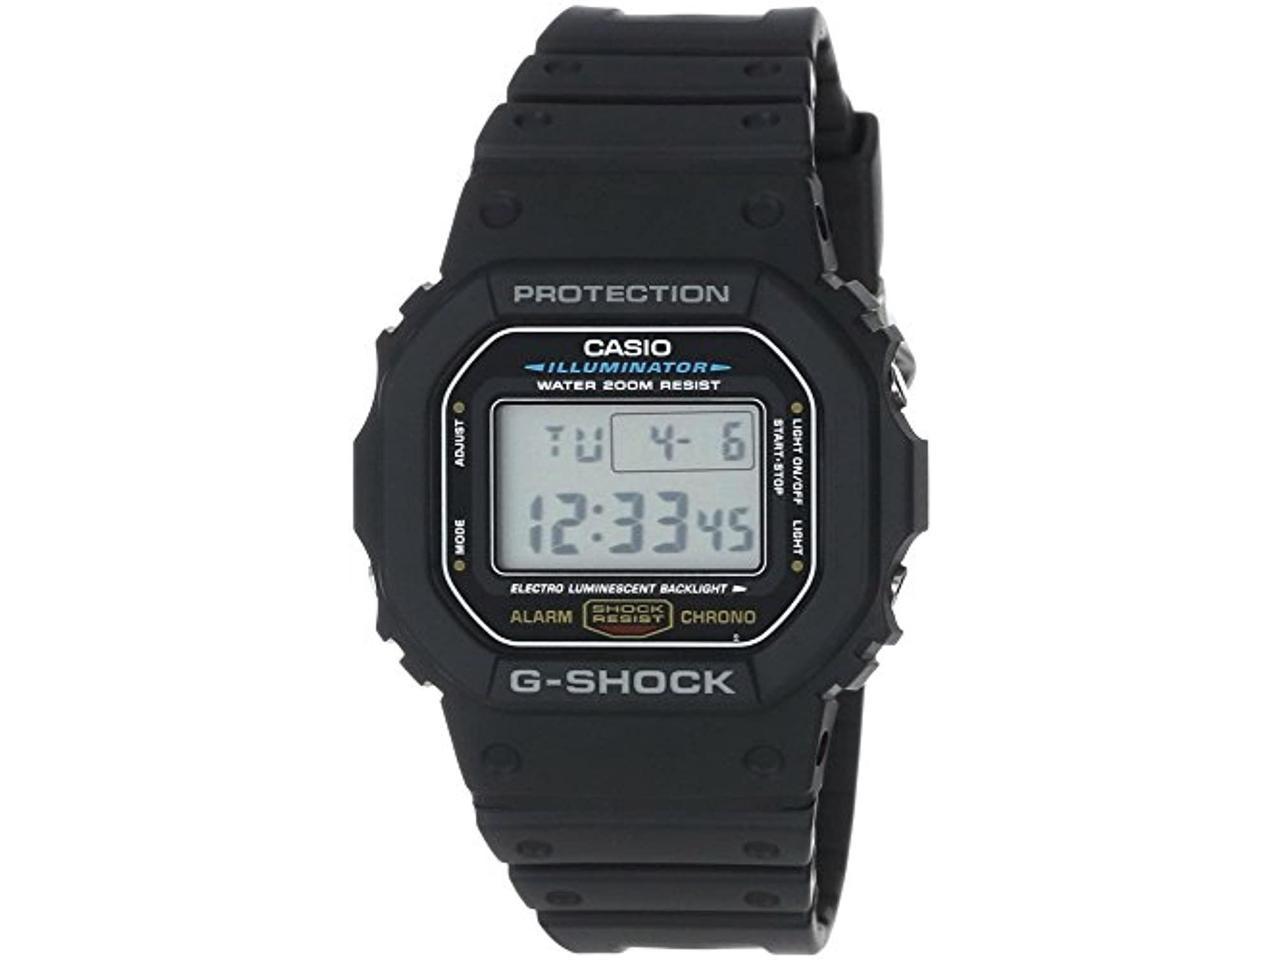 Casio G-Shock Classic Core Watch DW5600E-1V - image 2 of 5